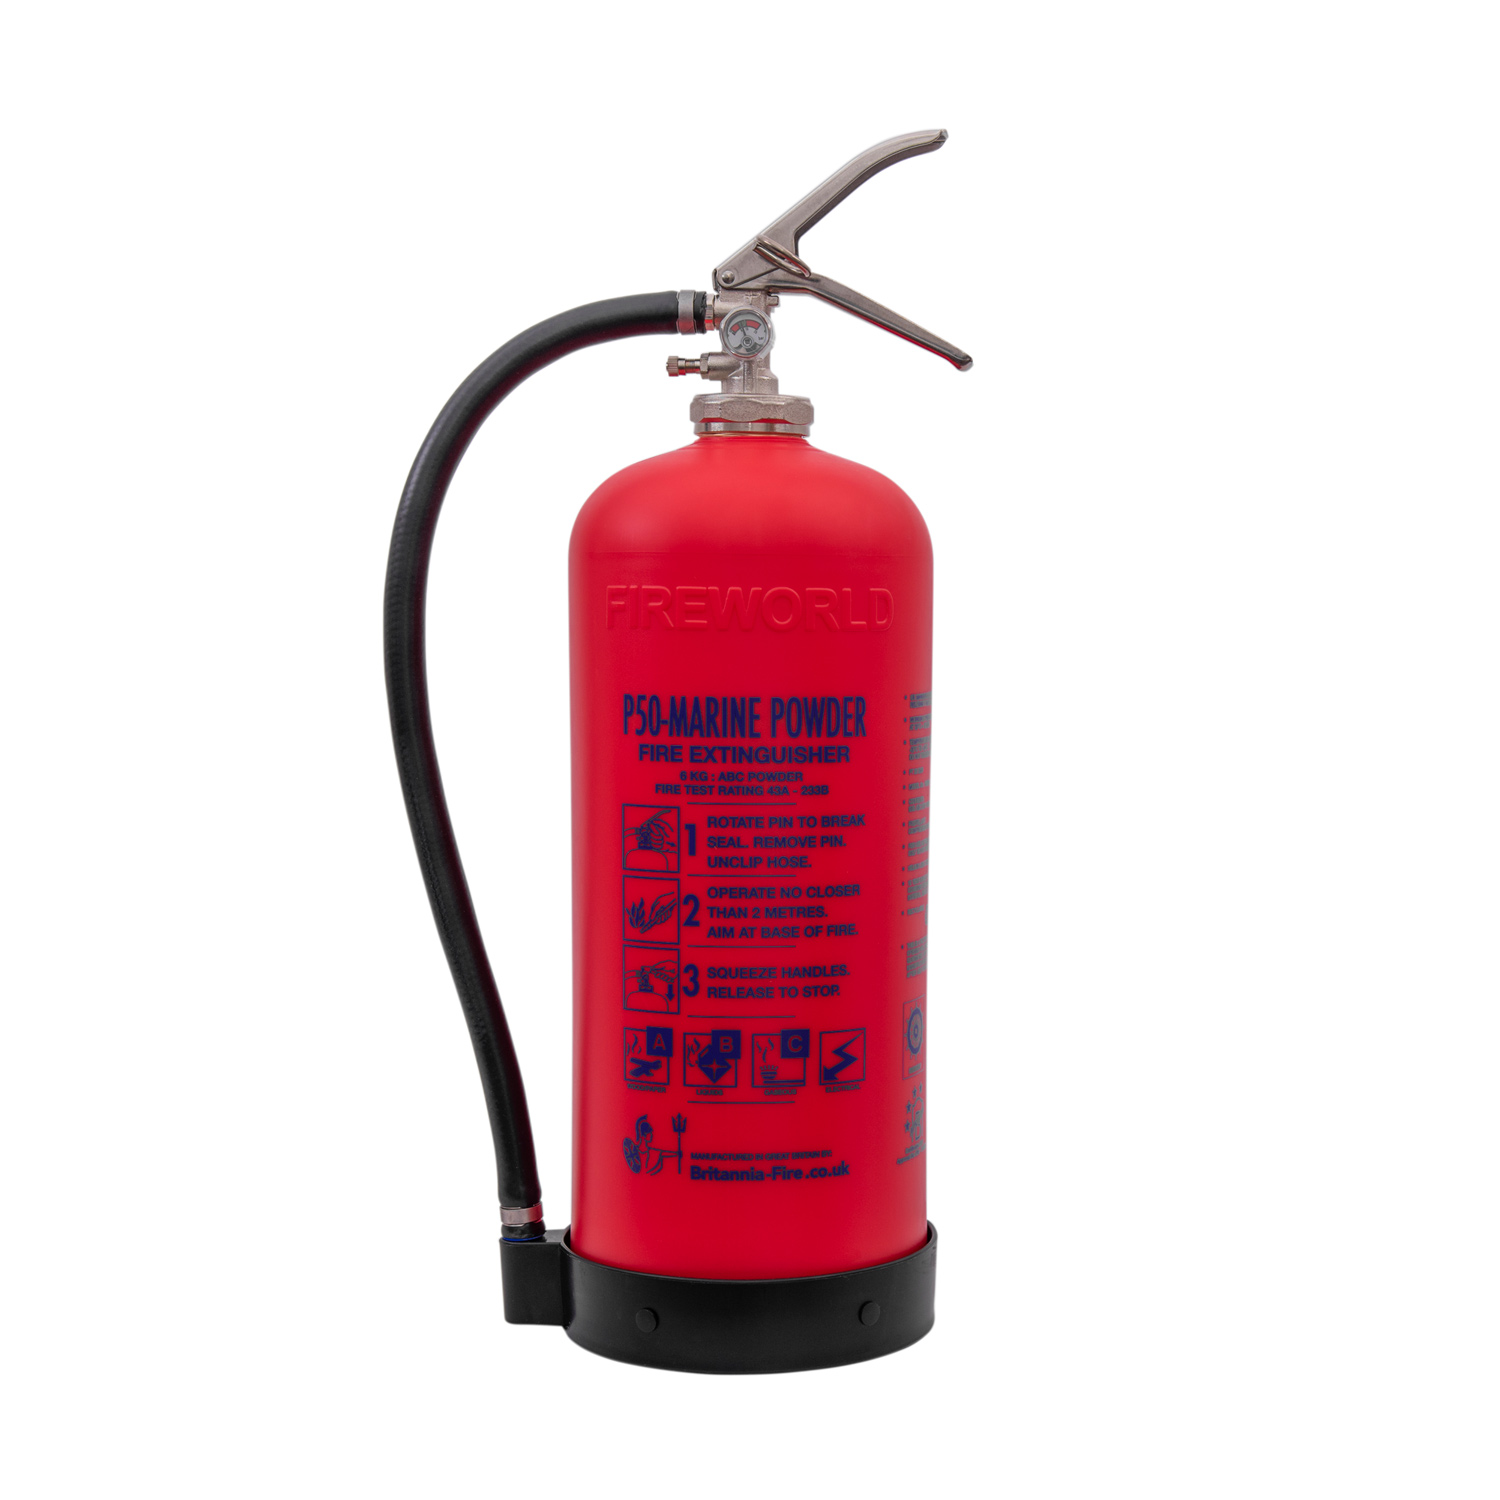 Image of the P50 MED 6kg Powder Fire Extinguisher